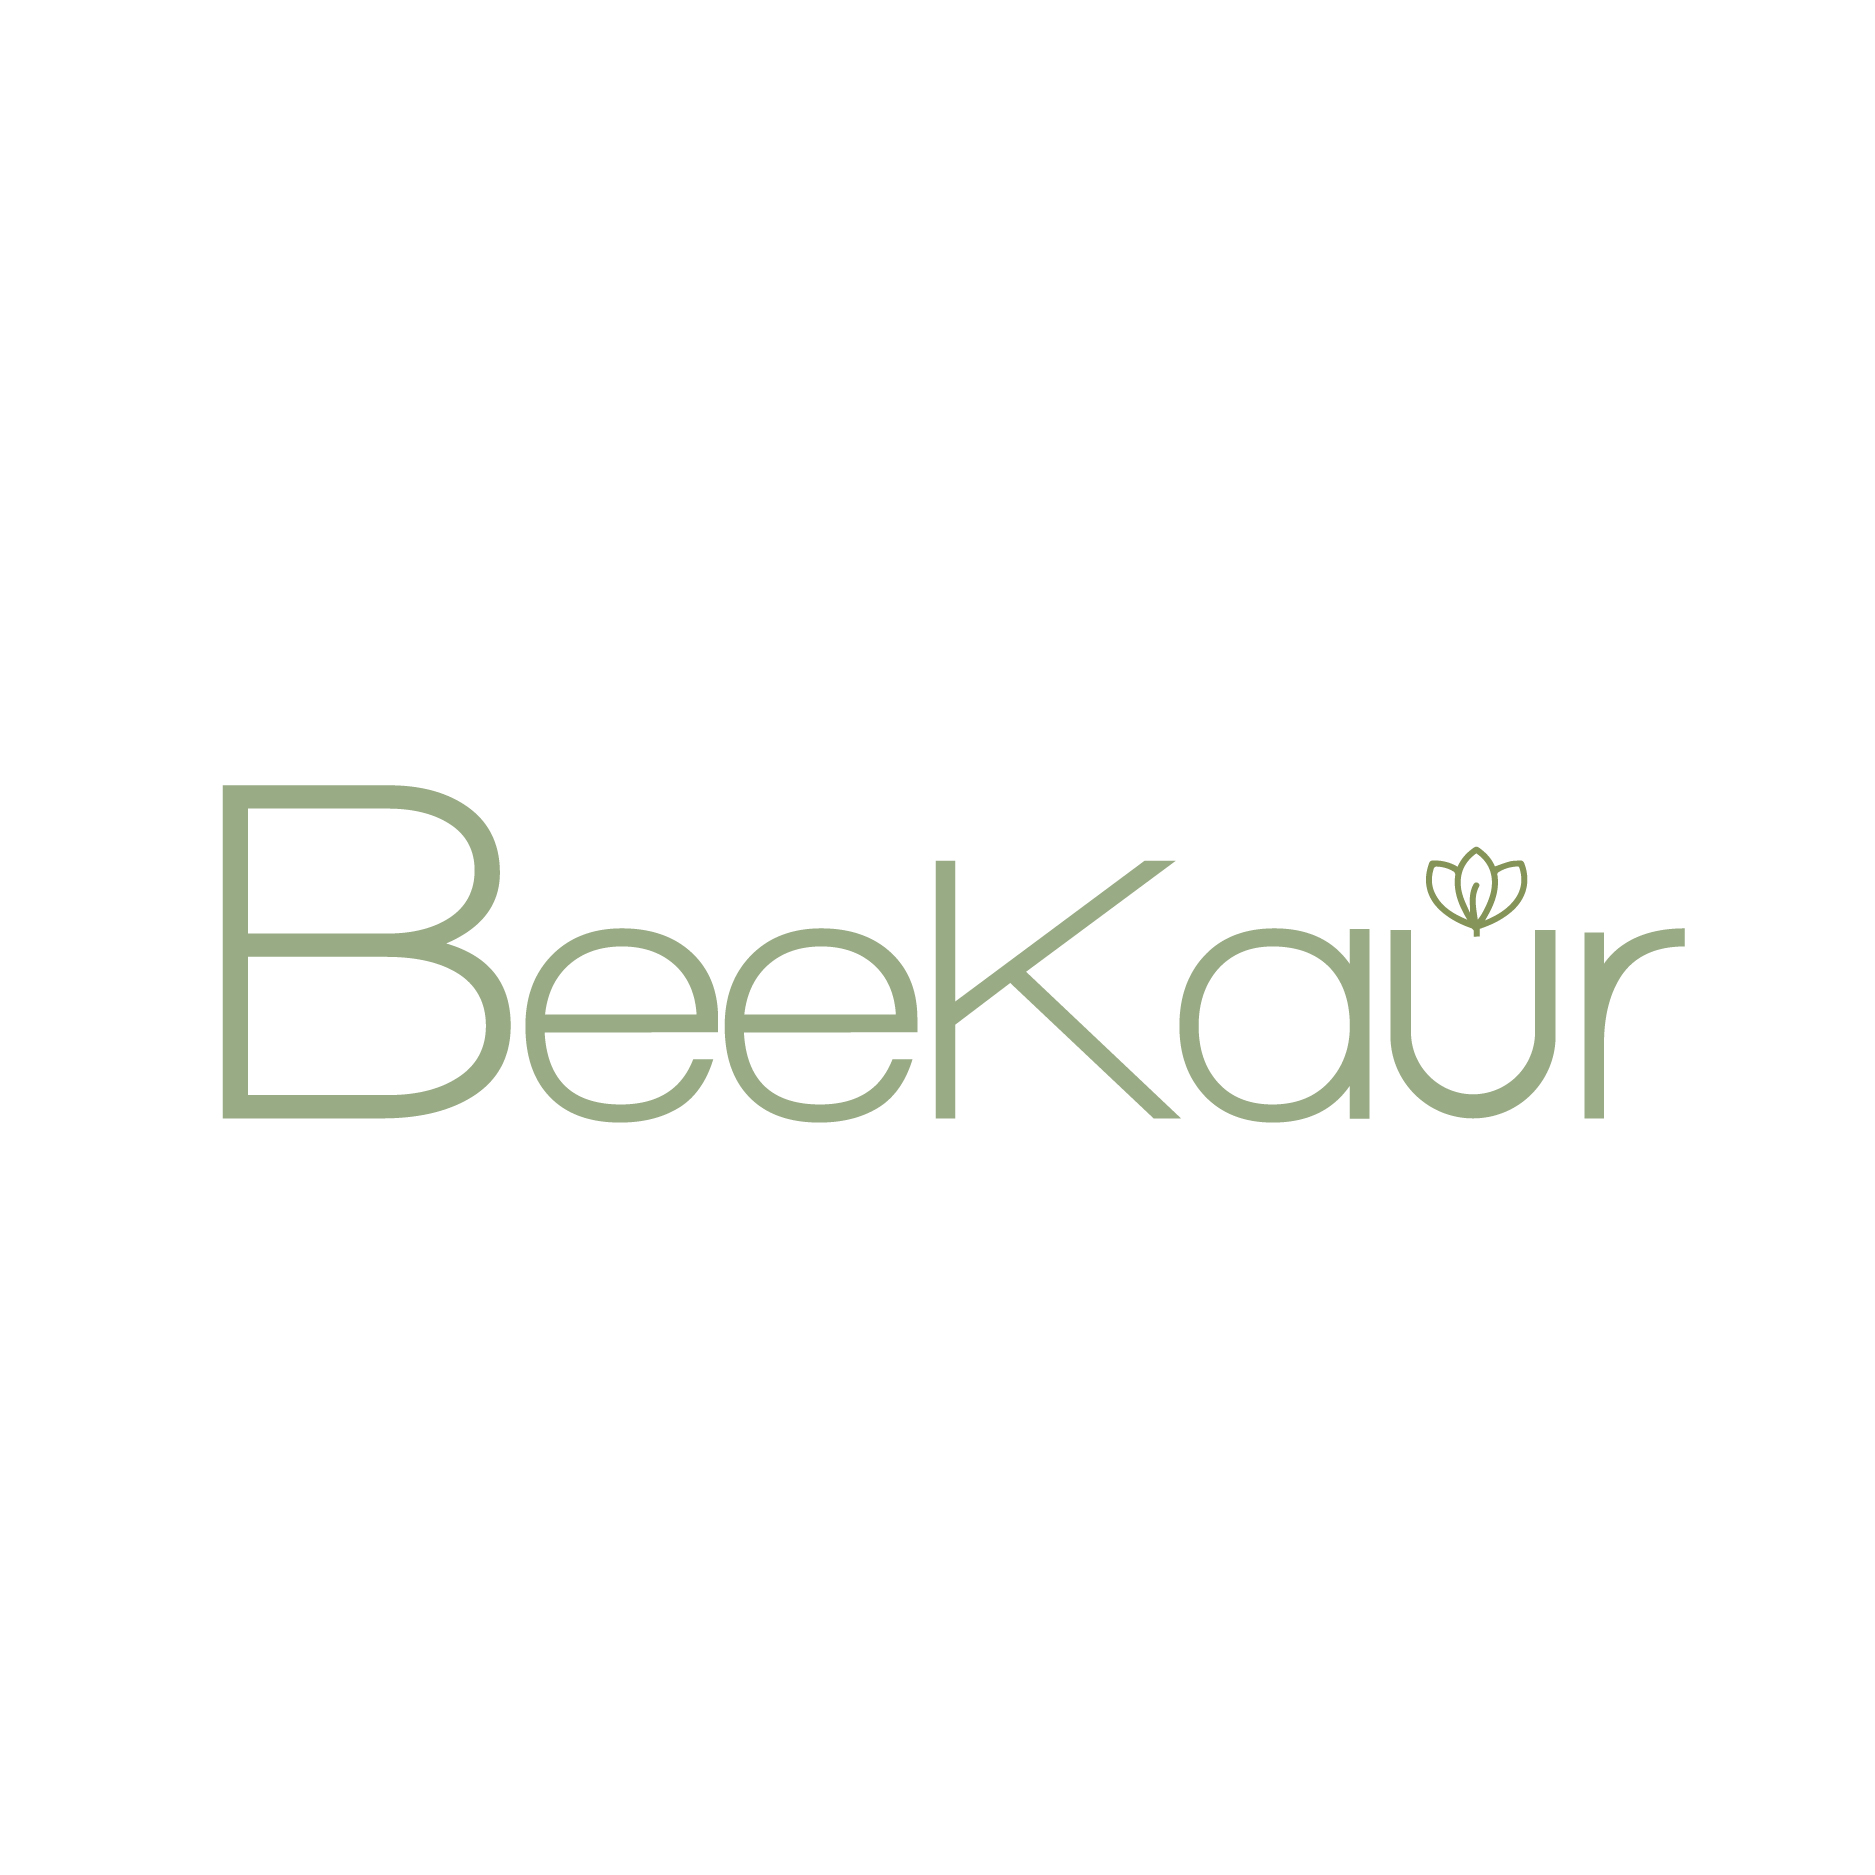 BeeKaur by Bvvtroot LLC